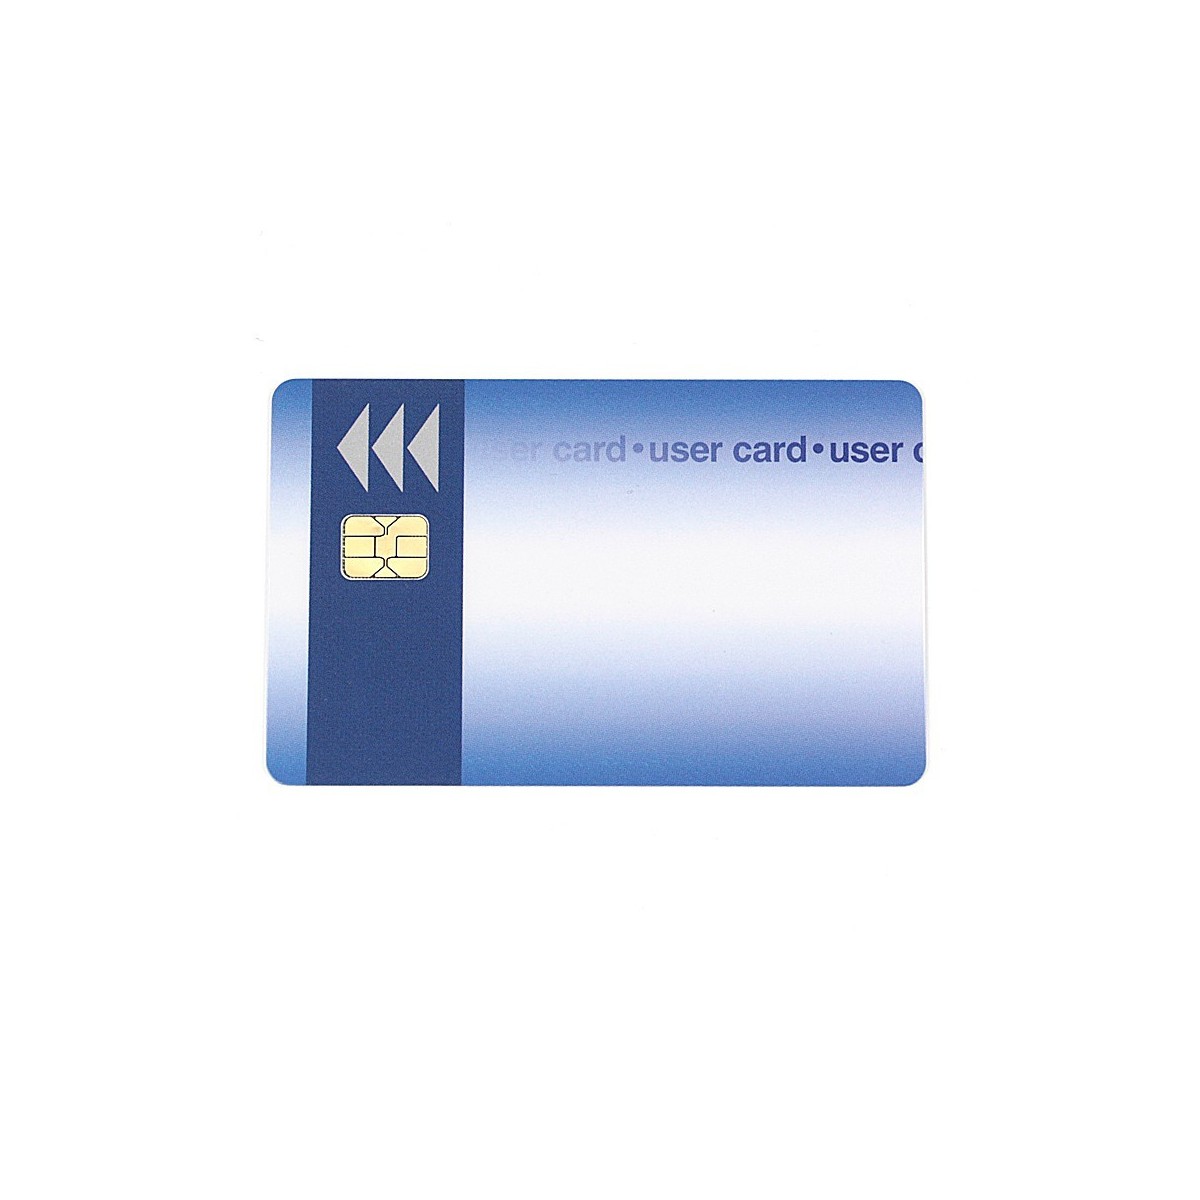 I2C-Smart Card 256 Byte (2k-Bit)